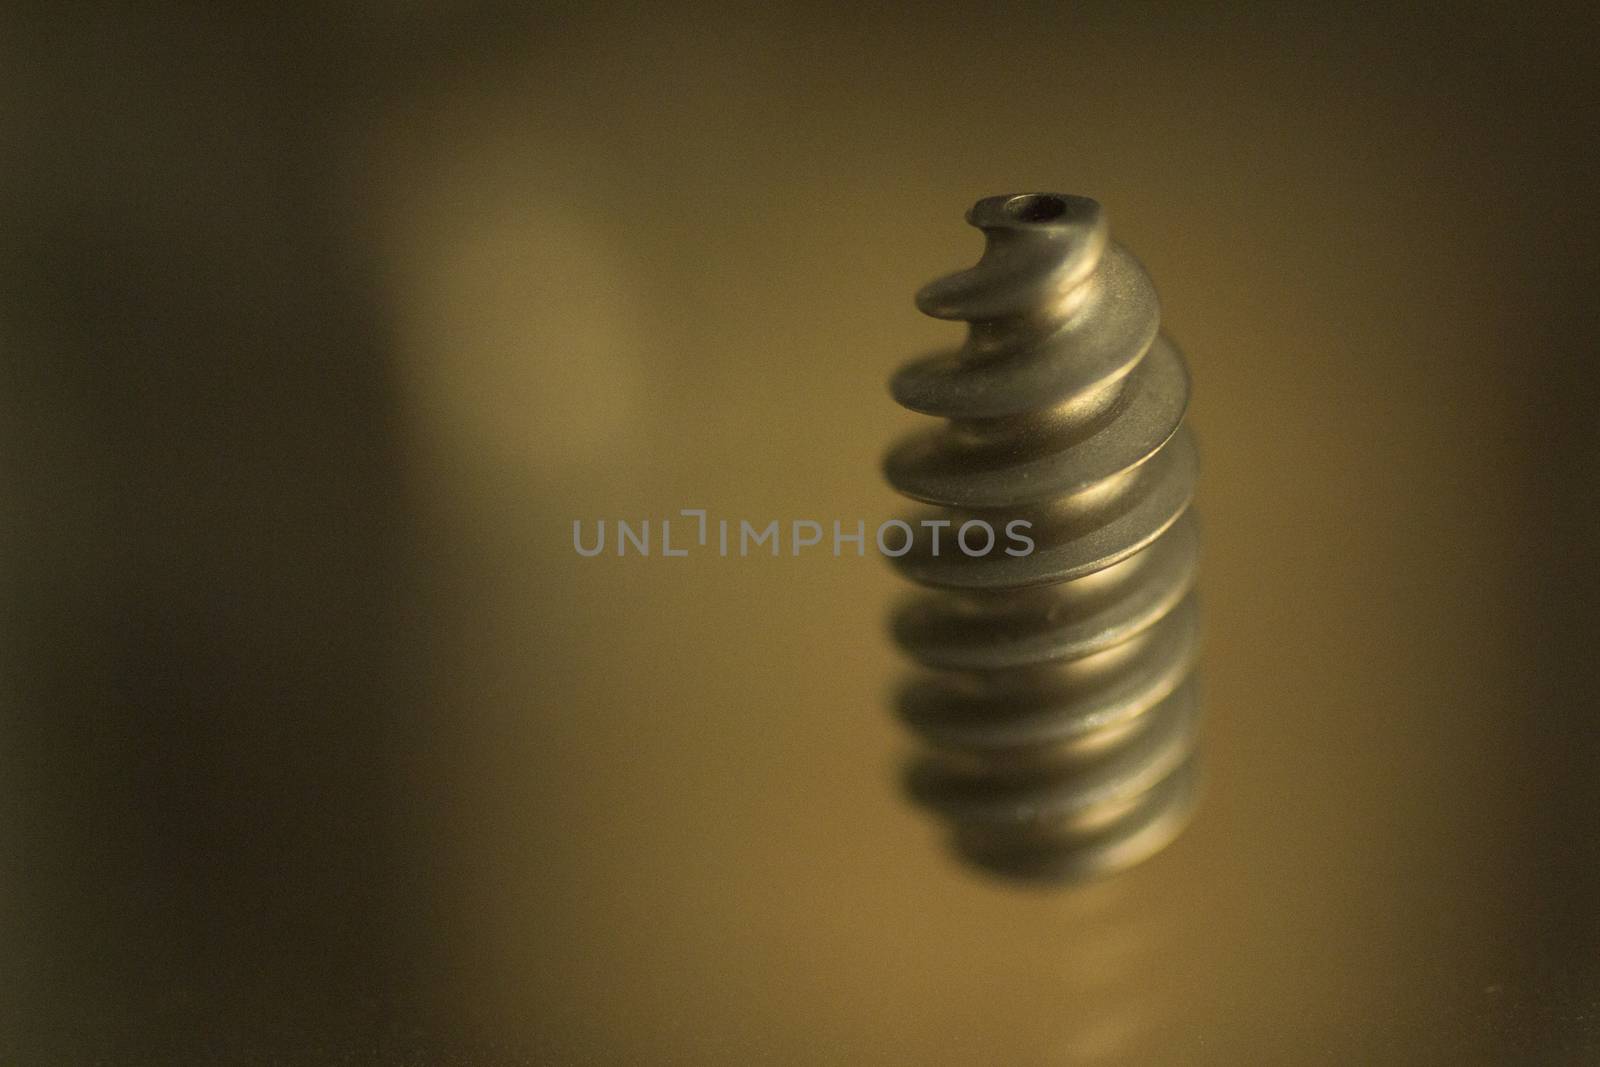 Traumatology orthopedic surgery implant titanium screw in semi silhouette against plain black studio background. Close-up macro horizontal photograph in brown warm tones. 